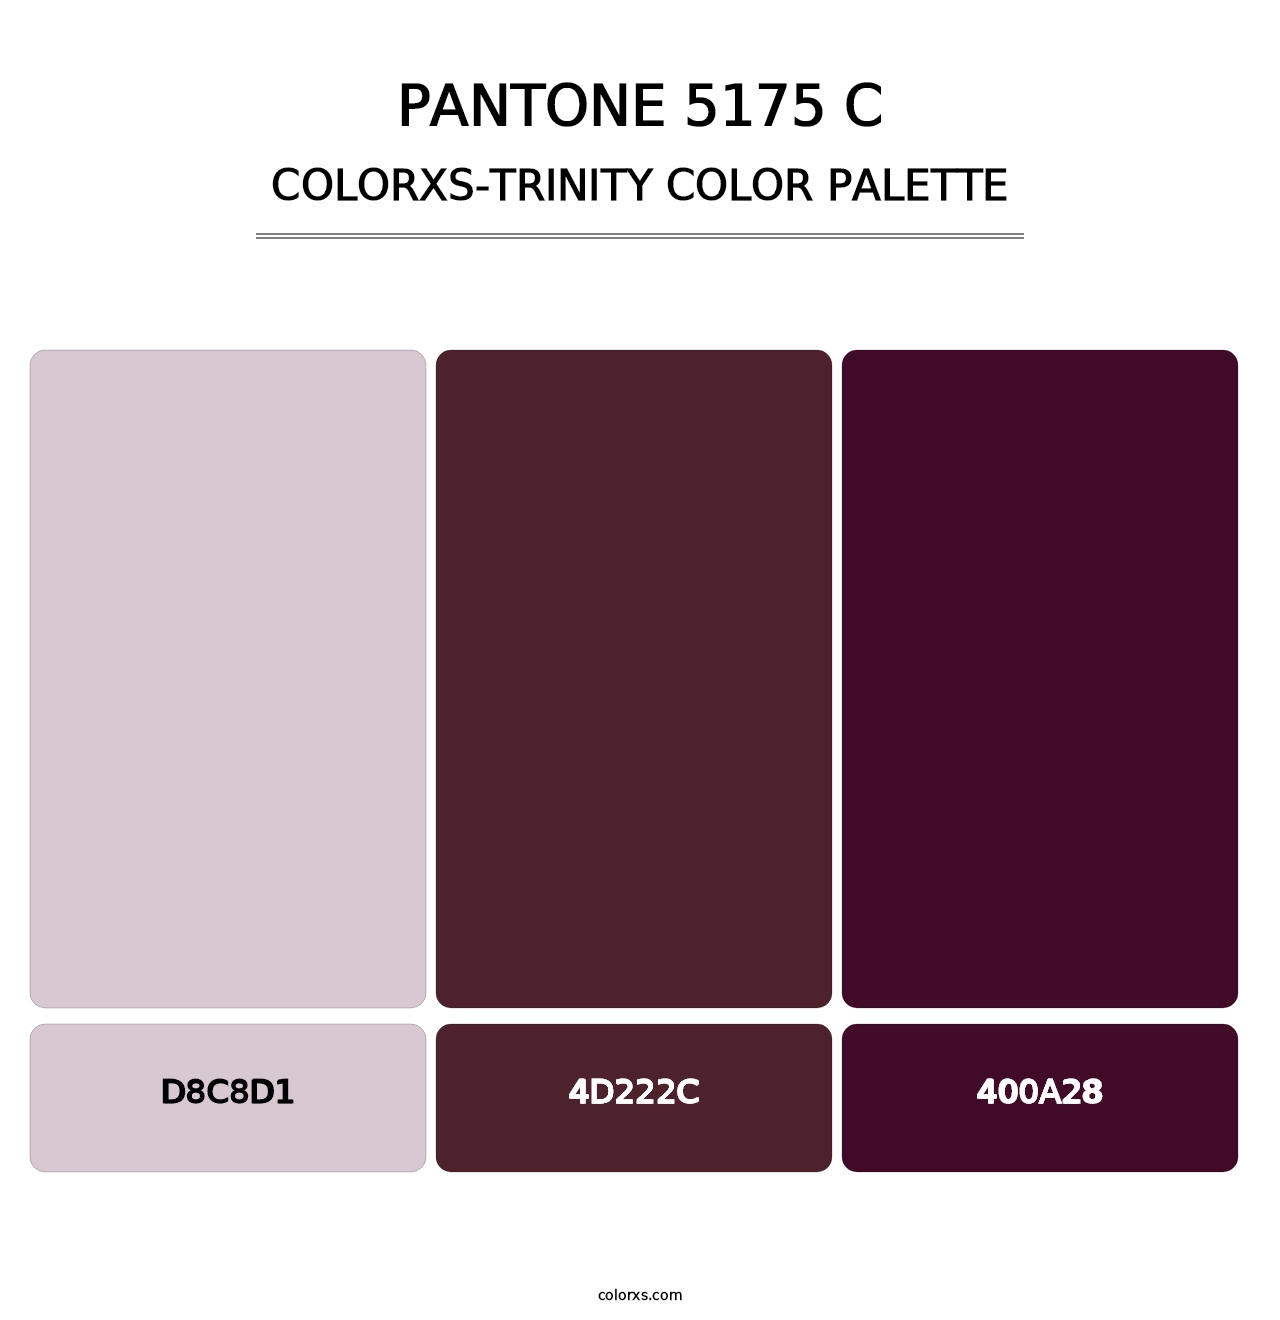 PANTONE 5175 C - Colorxs Trinity Palette